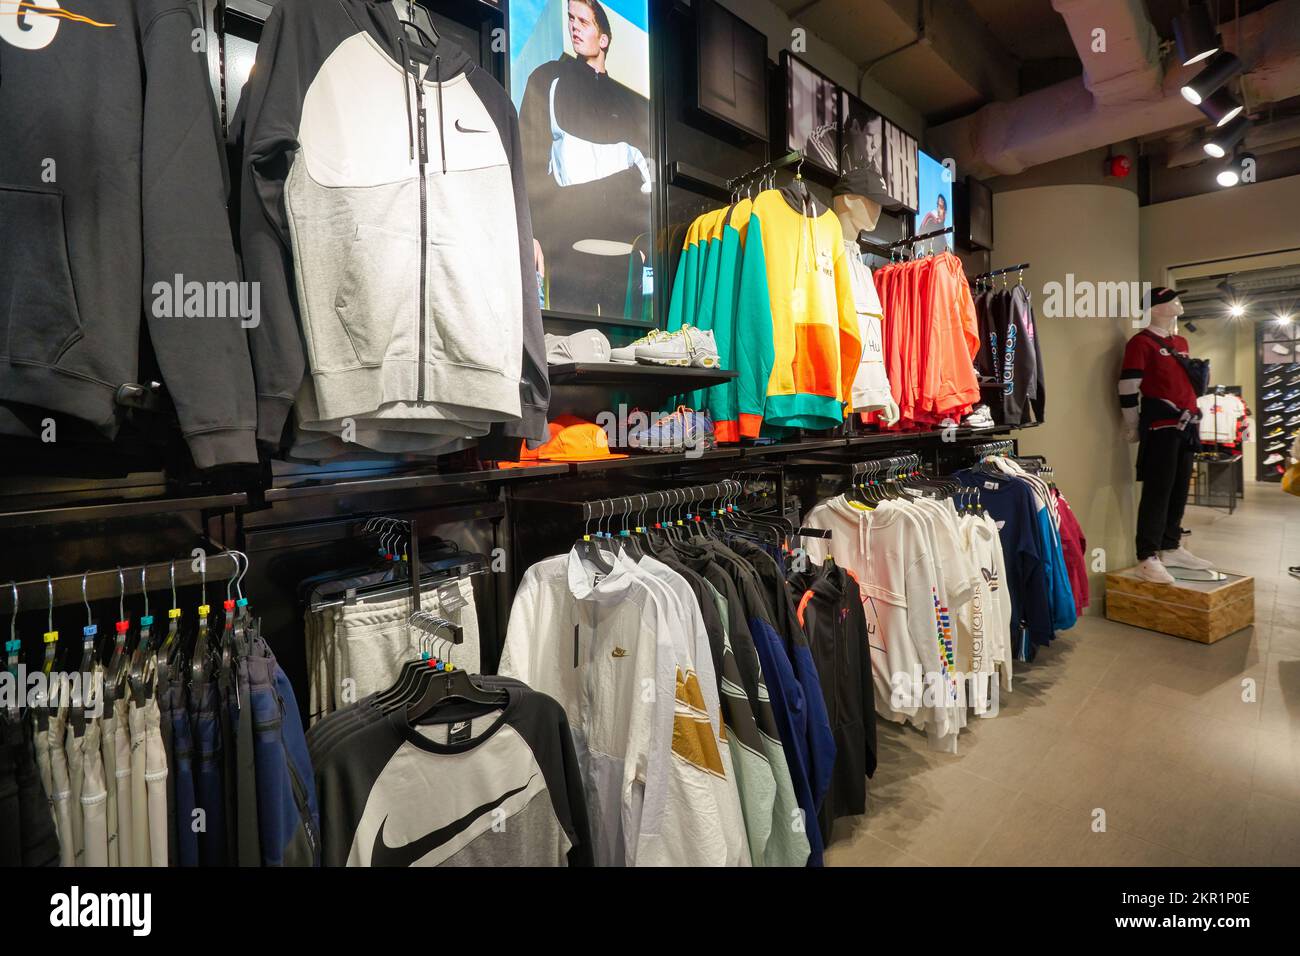 Foot locker retail outlet e imágenes de alta resolución - Alamy